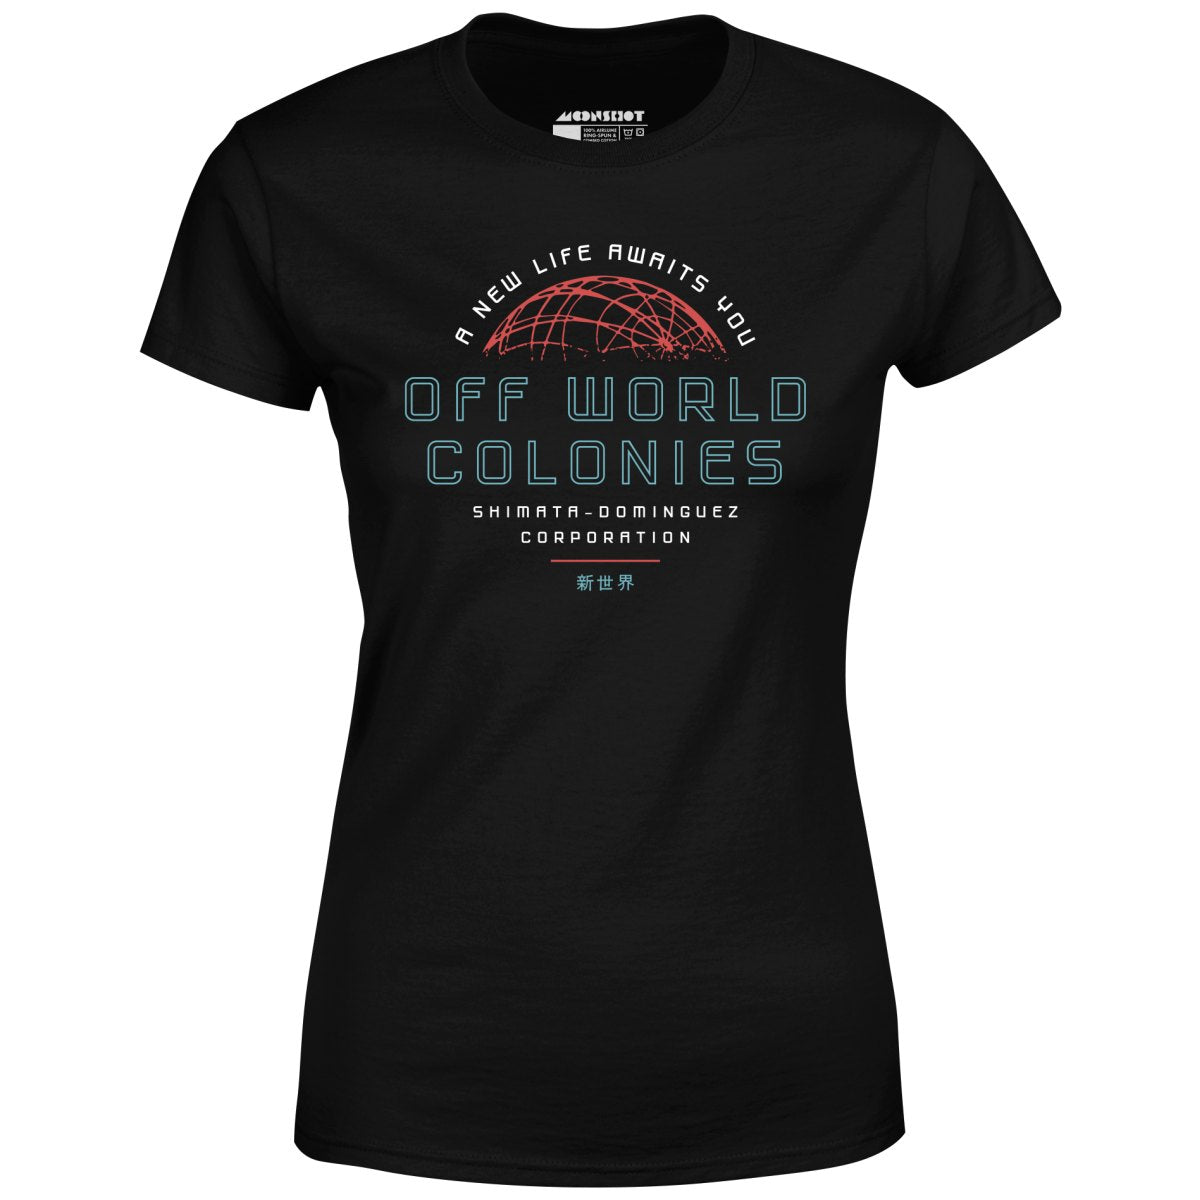 Off World Colonies - Women's T-Shirt